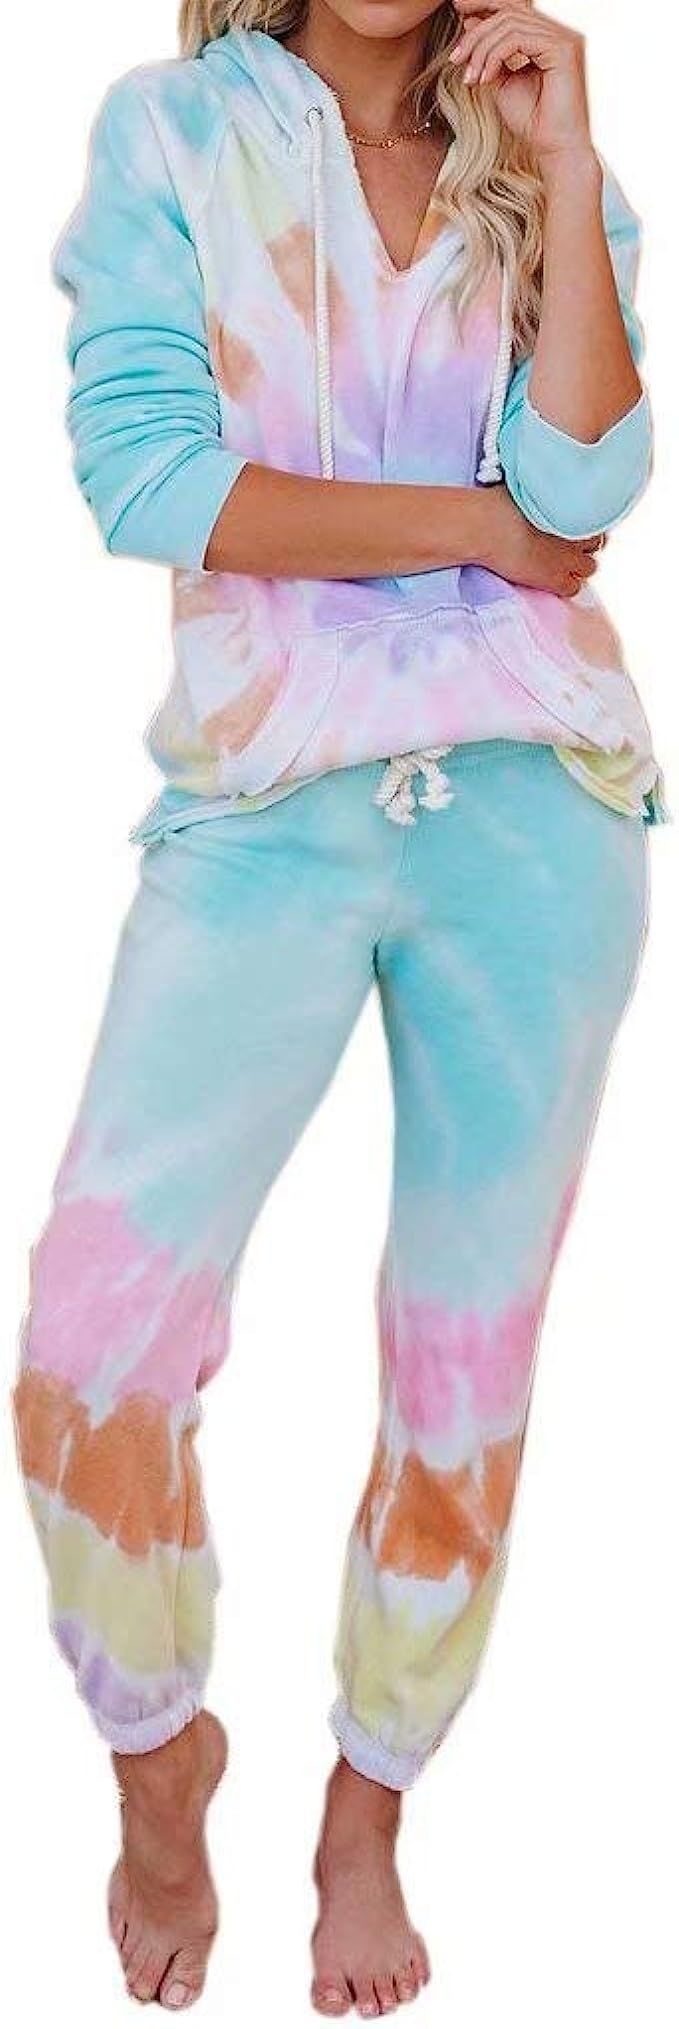 LACOZY Women's Tie Dye Printed Hoodie Long Sleeve Tops and Pants Long Pajamas Set Joggers PJ Sets... | Amazon (US)